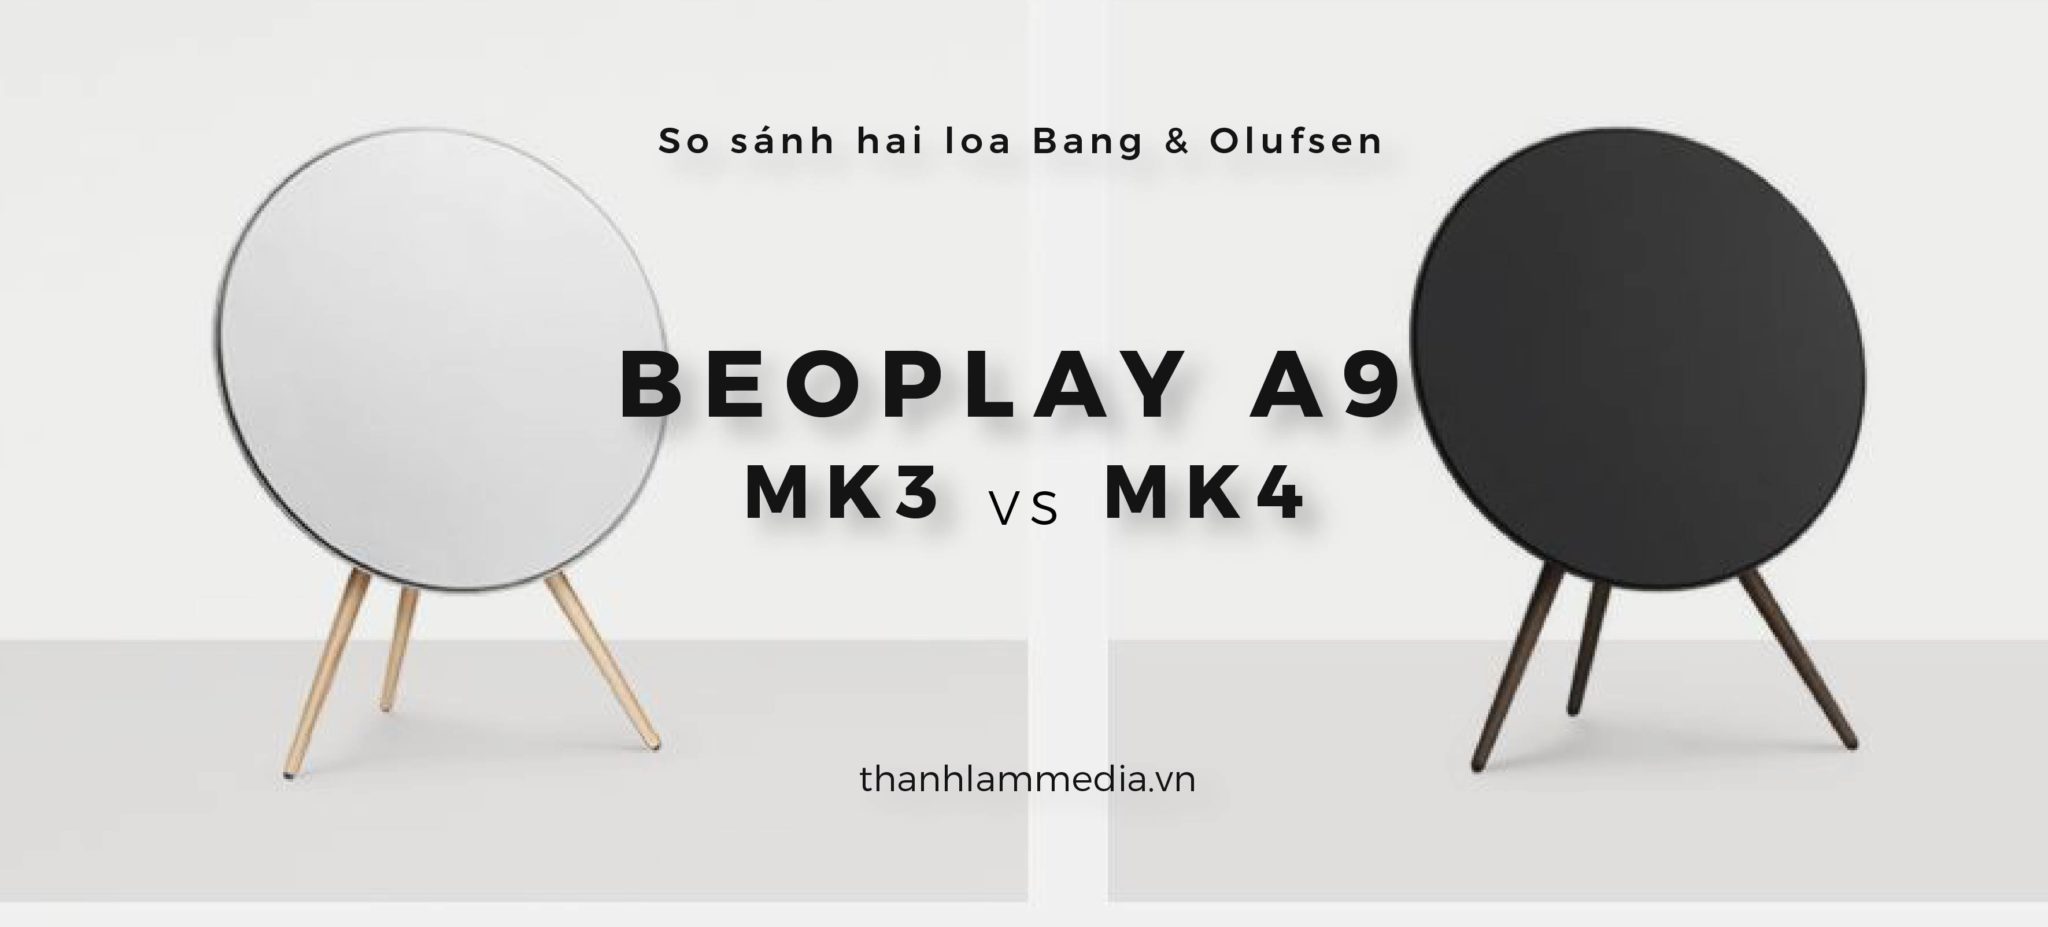 So sánh hai loa Beoplay A9 Mk3 và Beoplay A9 Mk4 36